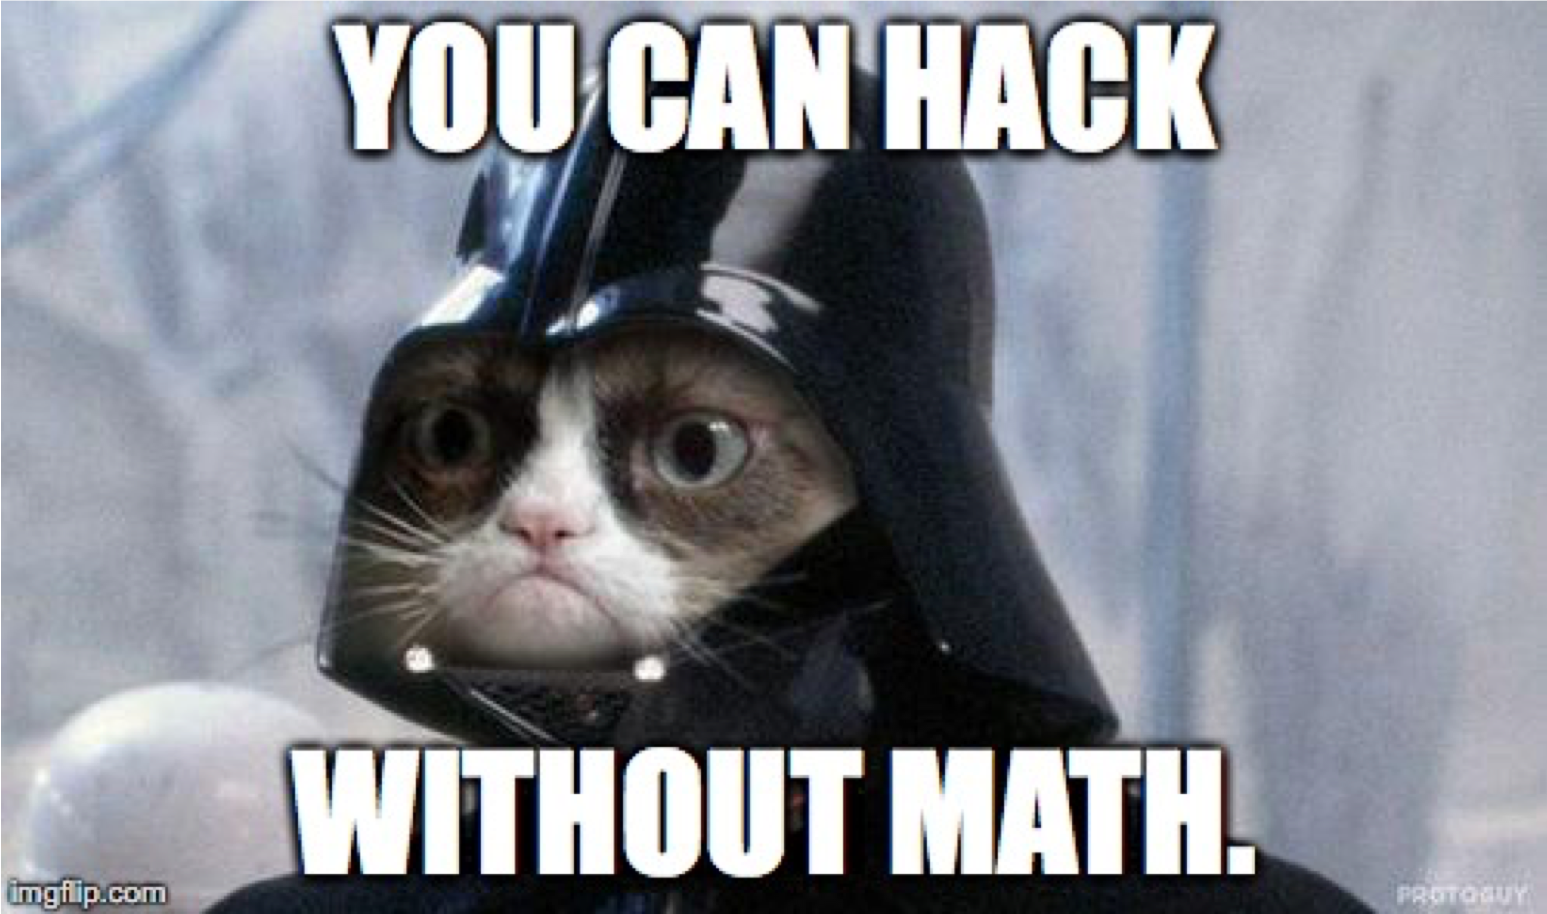 ospf-hack-without-math